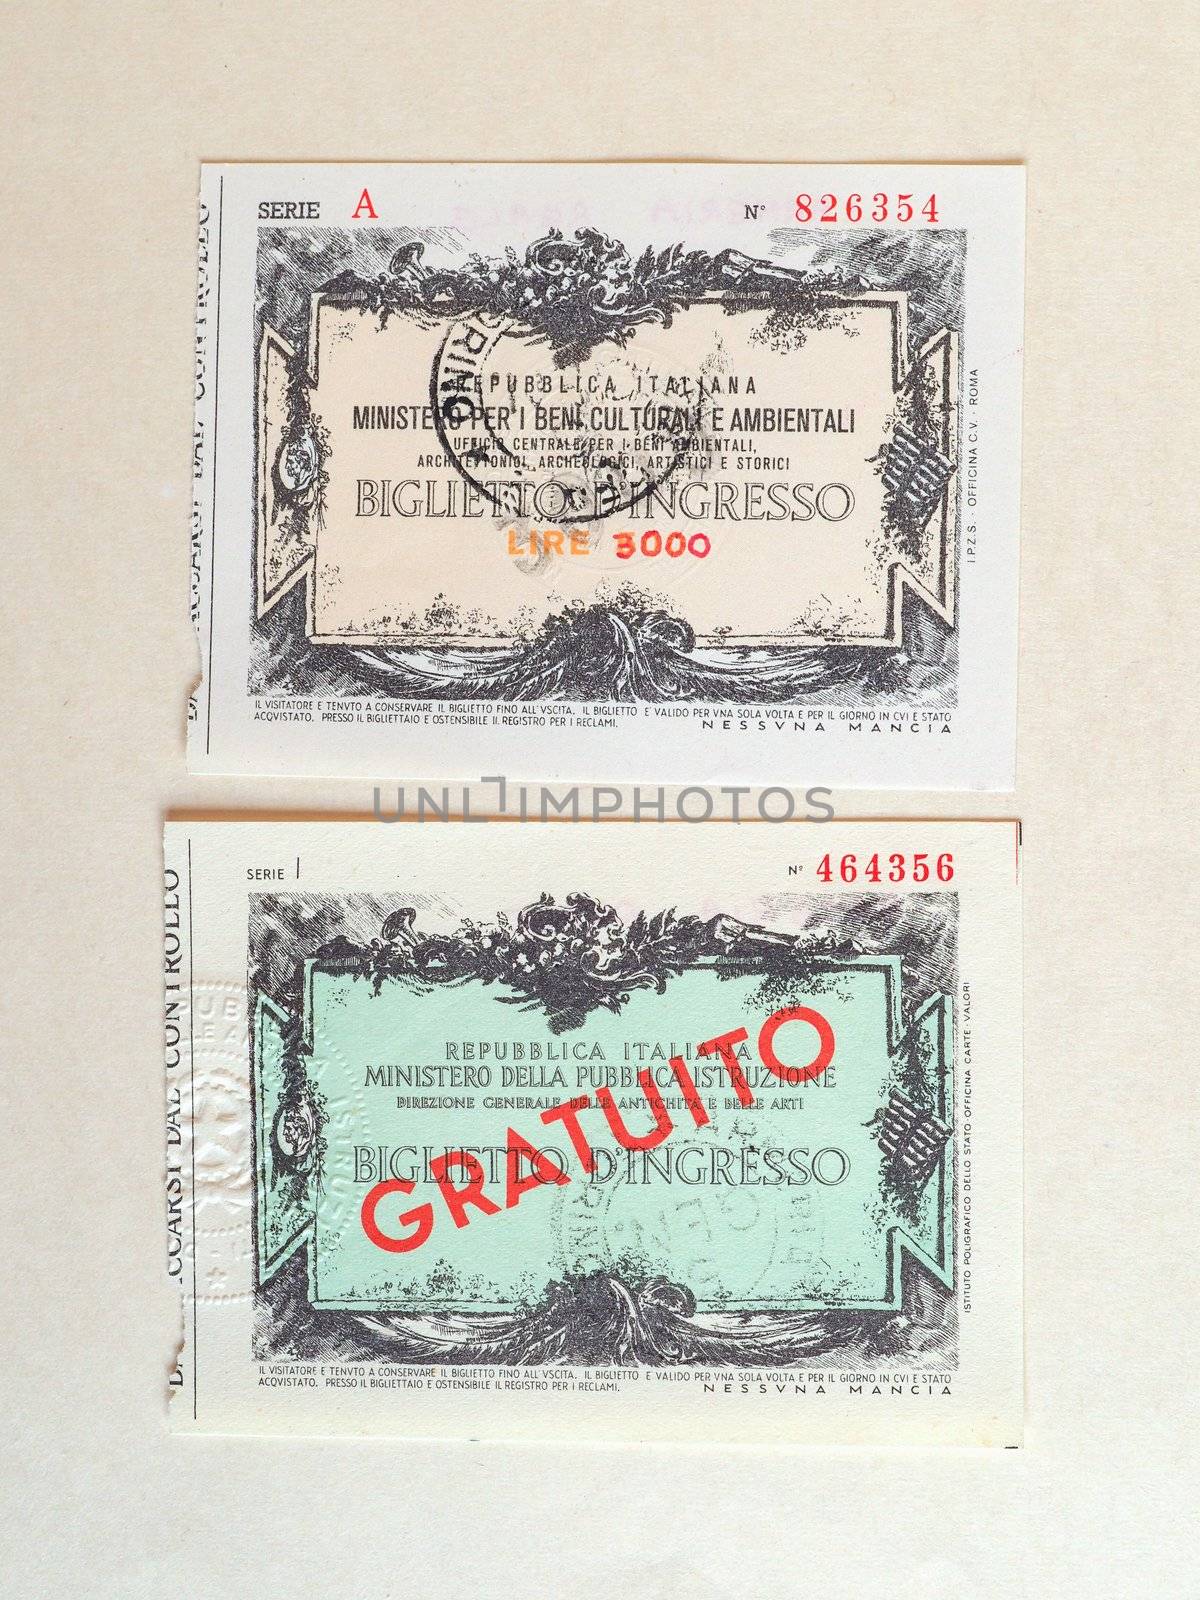 TURIN - JUN 2020: Vintage Italian museum ticket by claudiodivizia